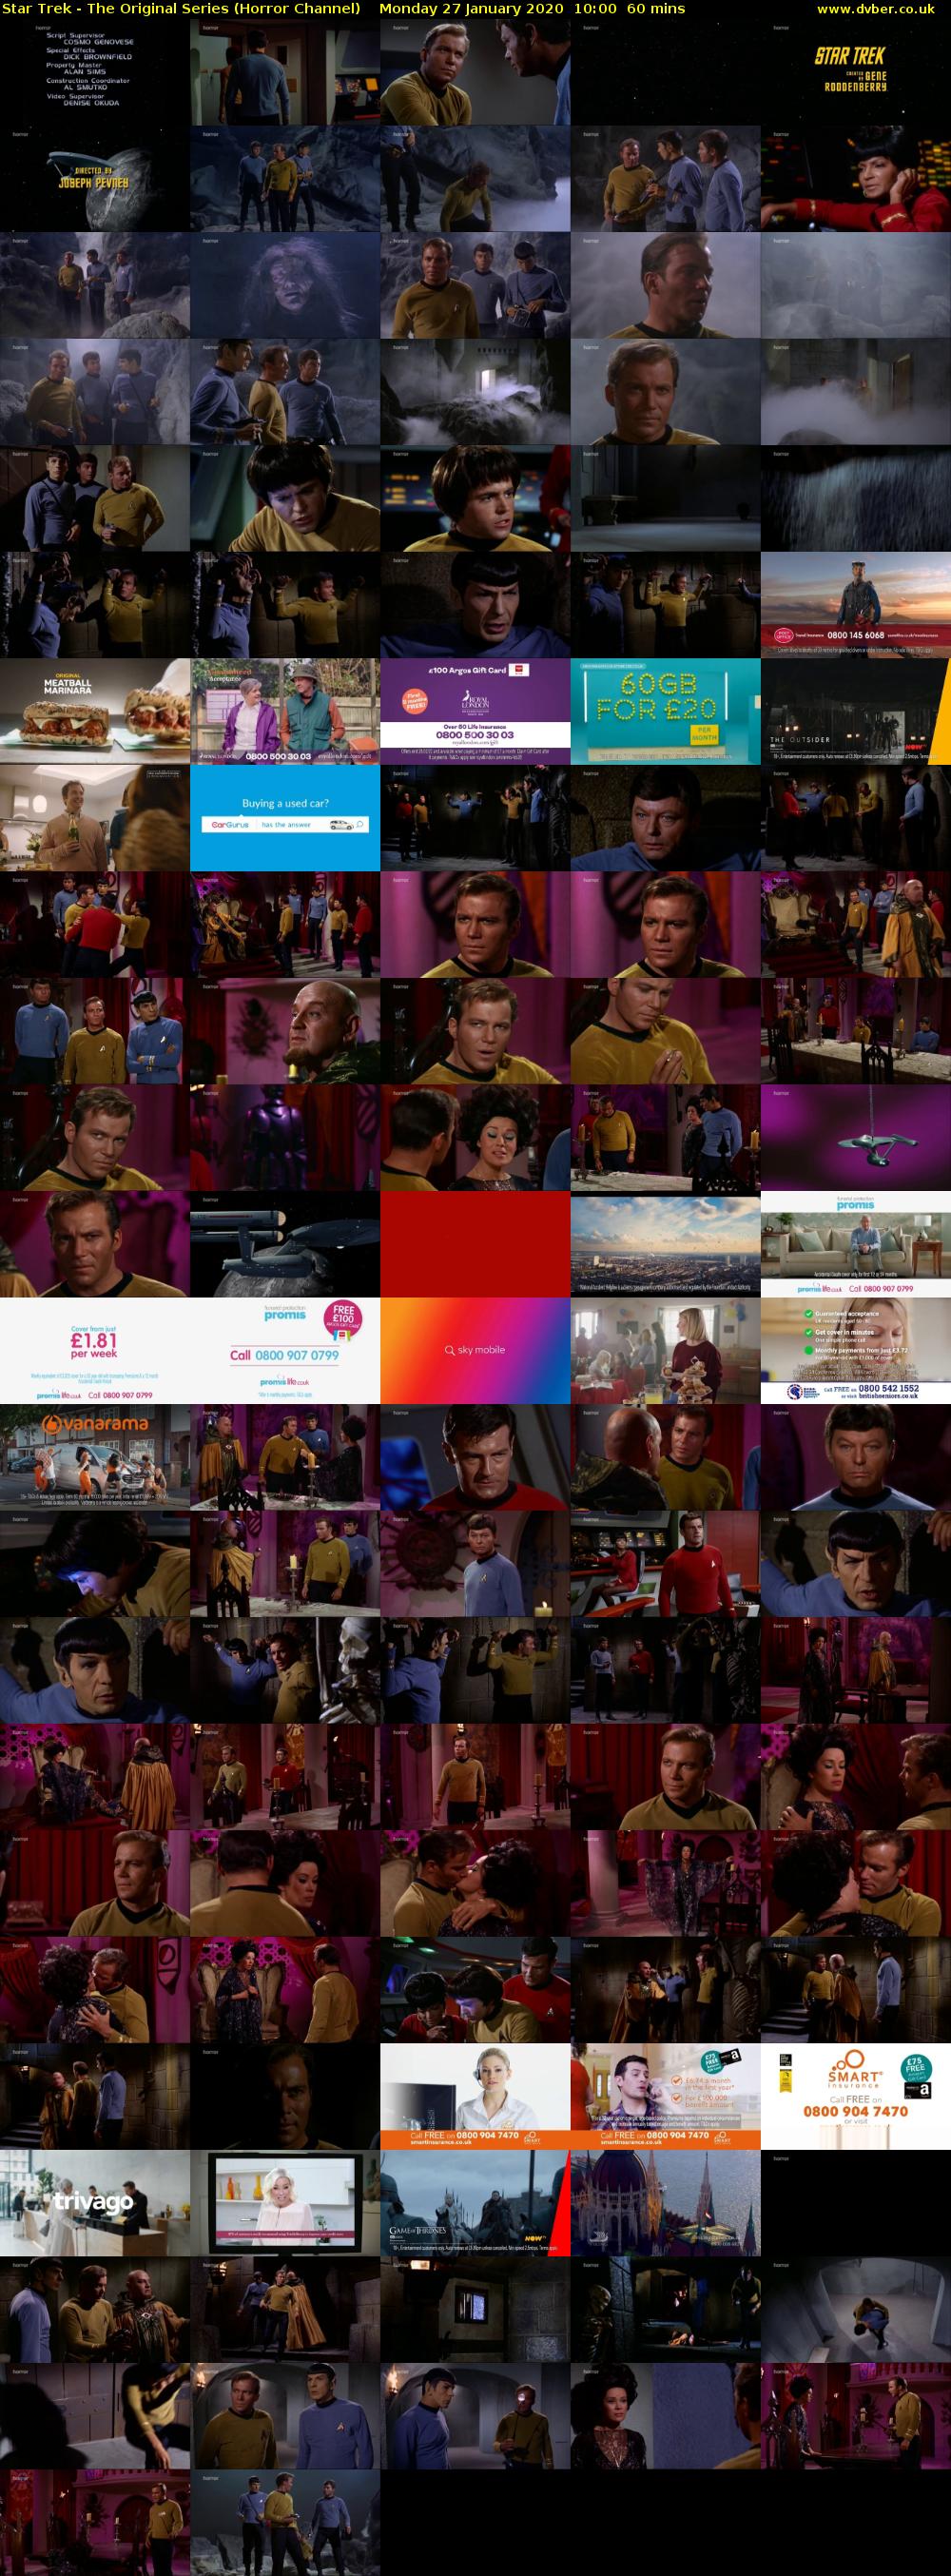 Star Trek - The Original Series (Horror Channel) Monday 27 January 2020 10:00 - 11:00